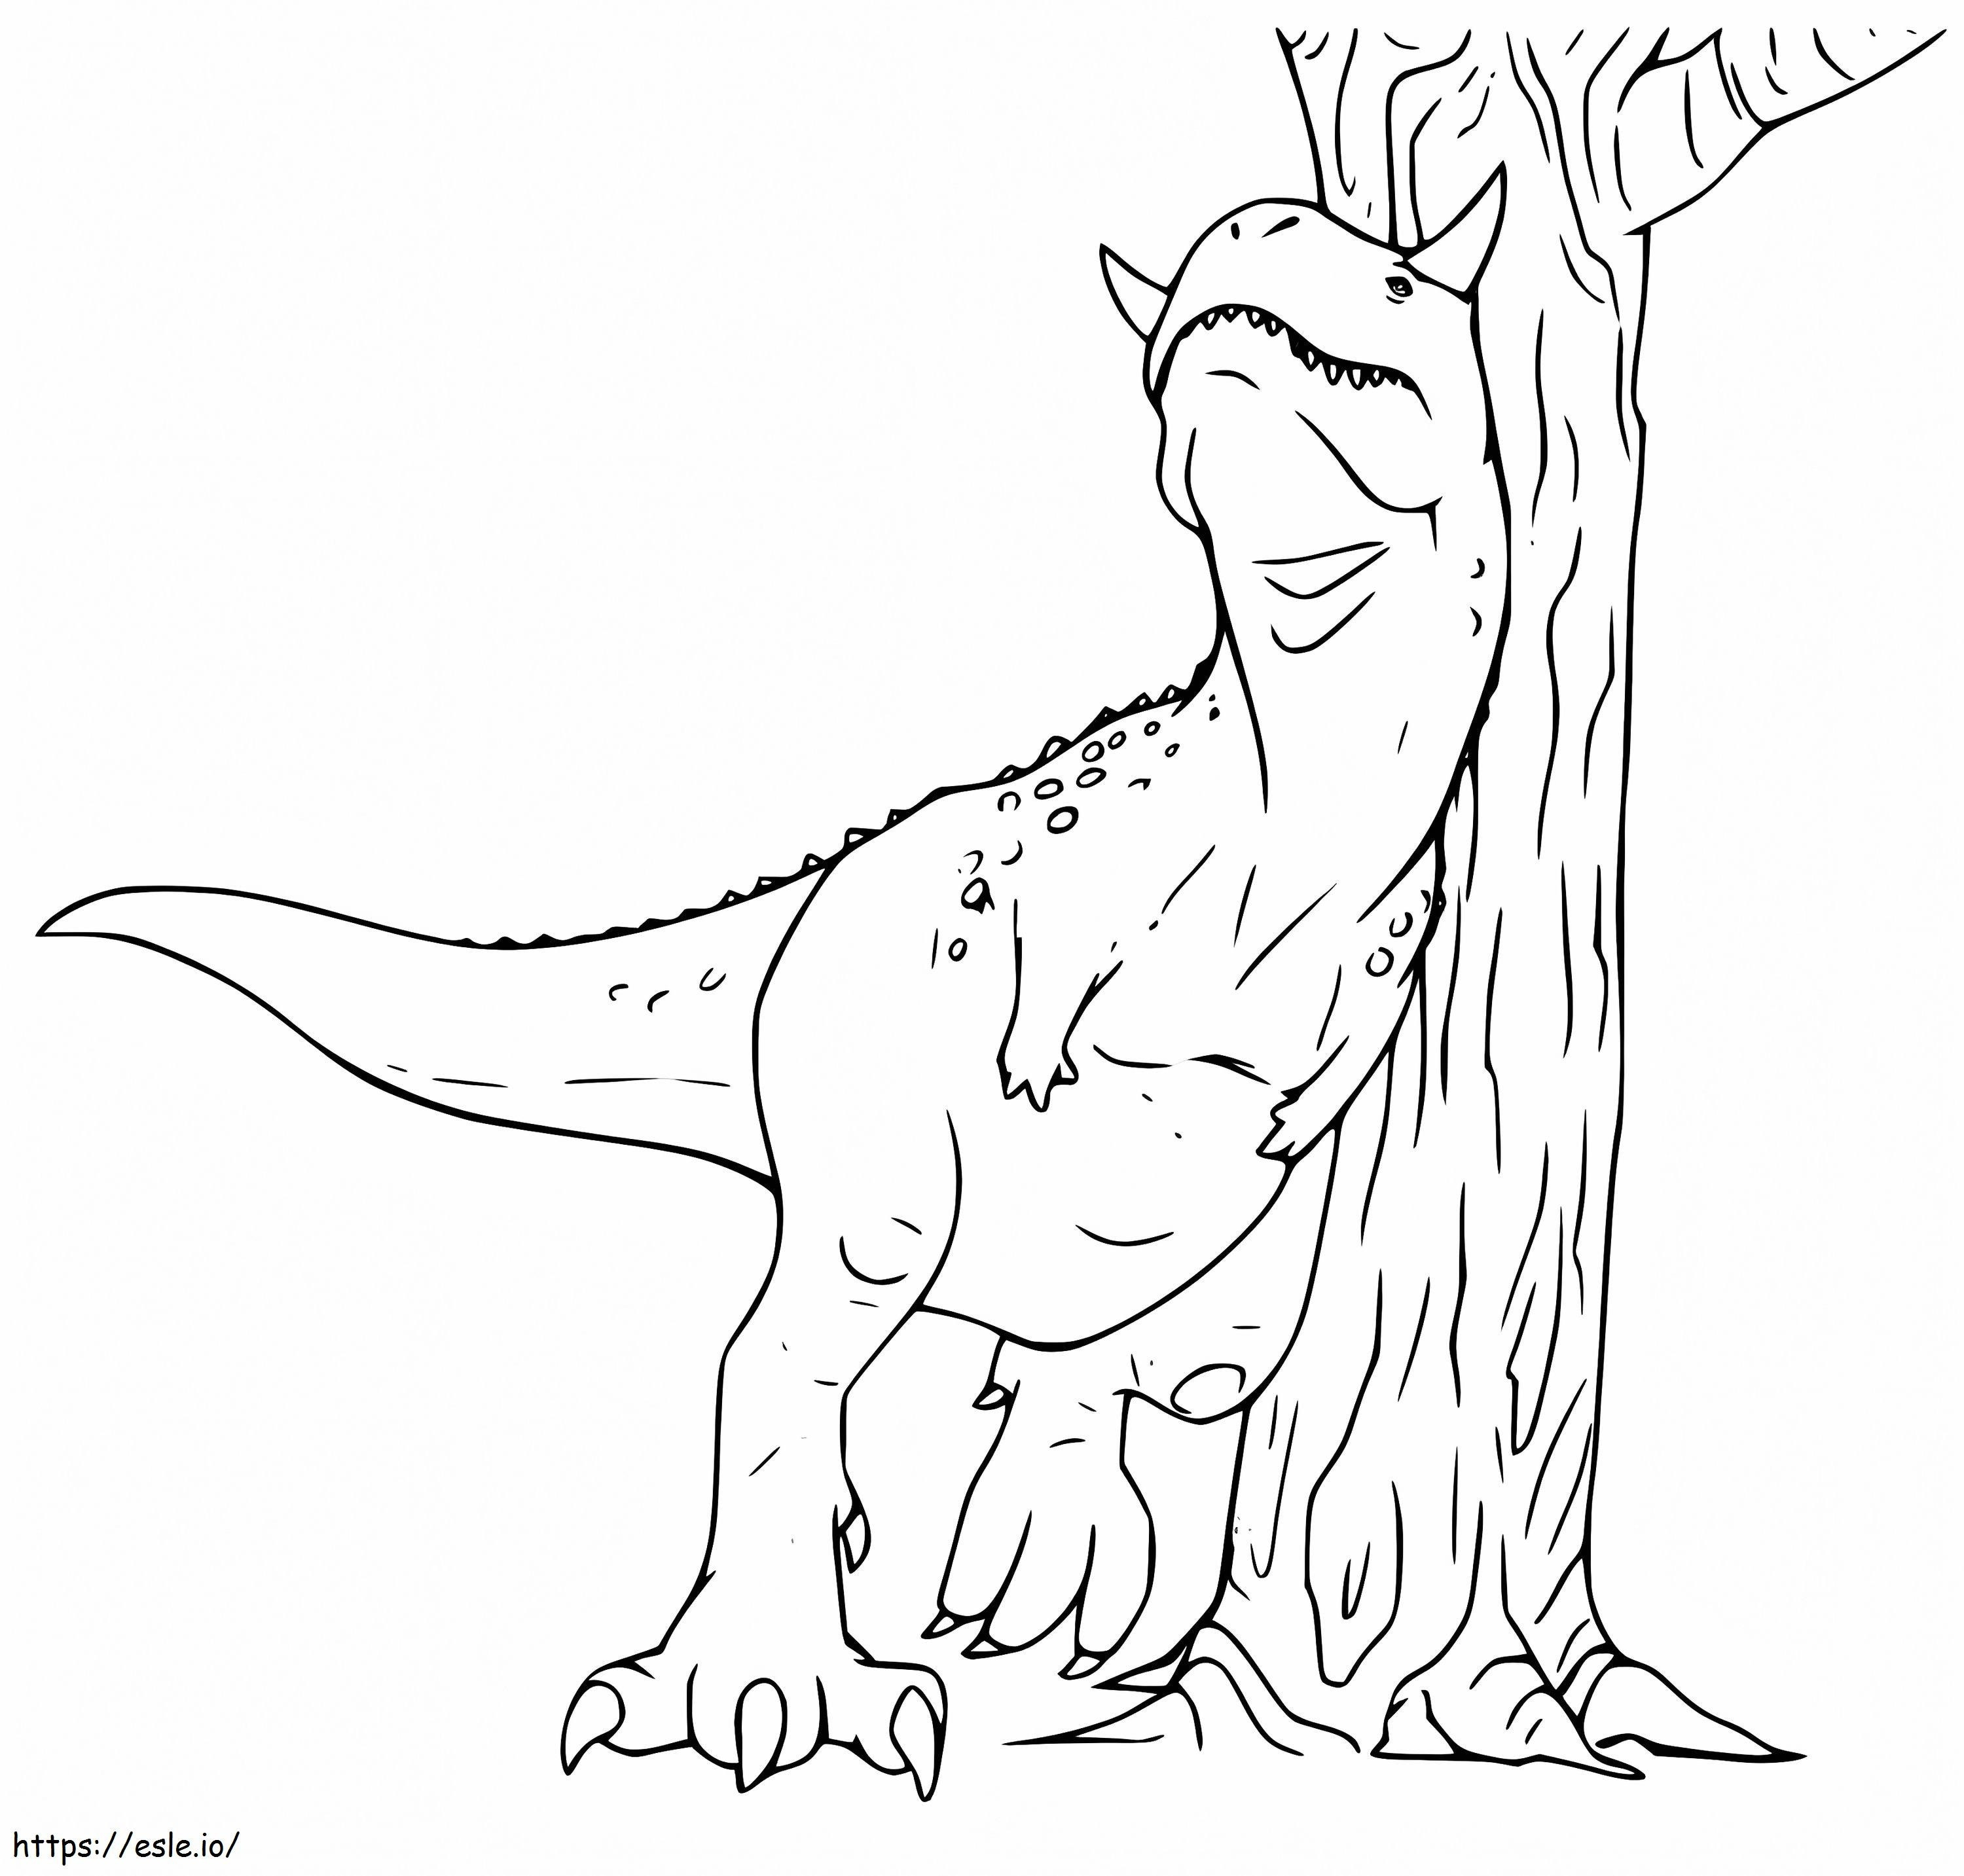 Printable Carnotaurus coloring page